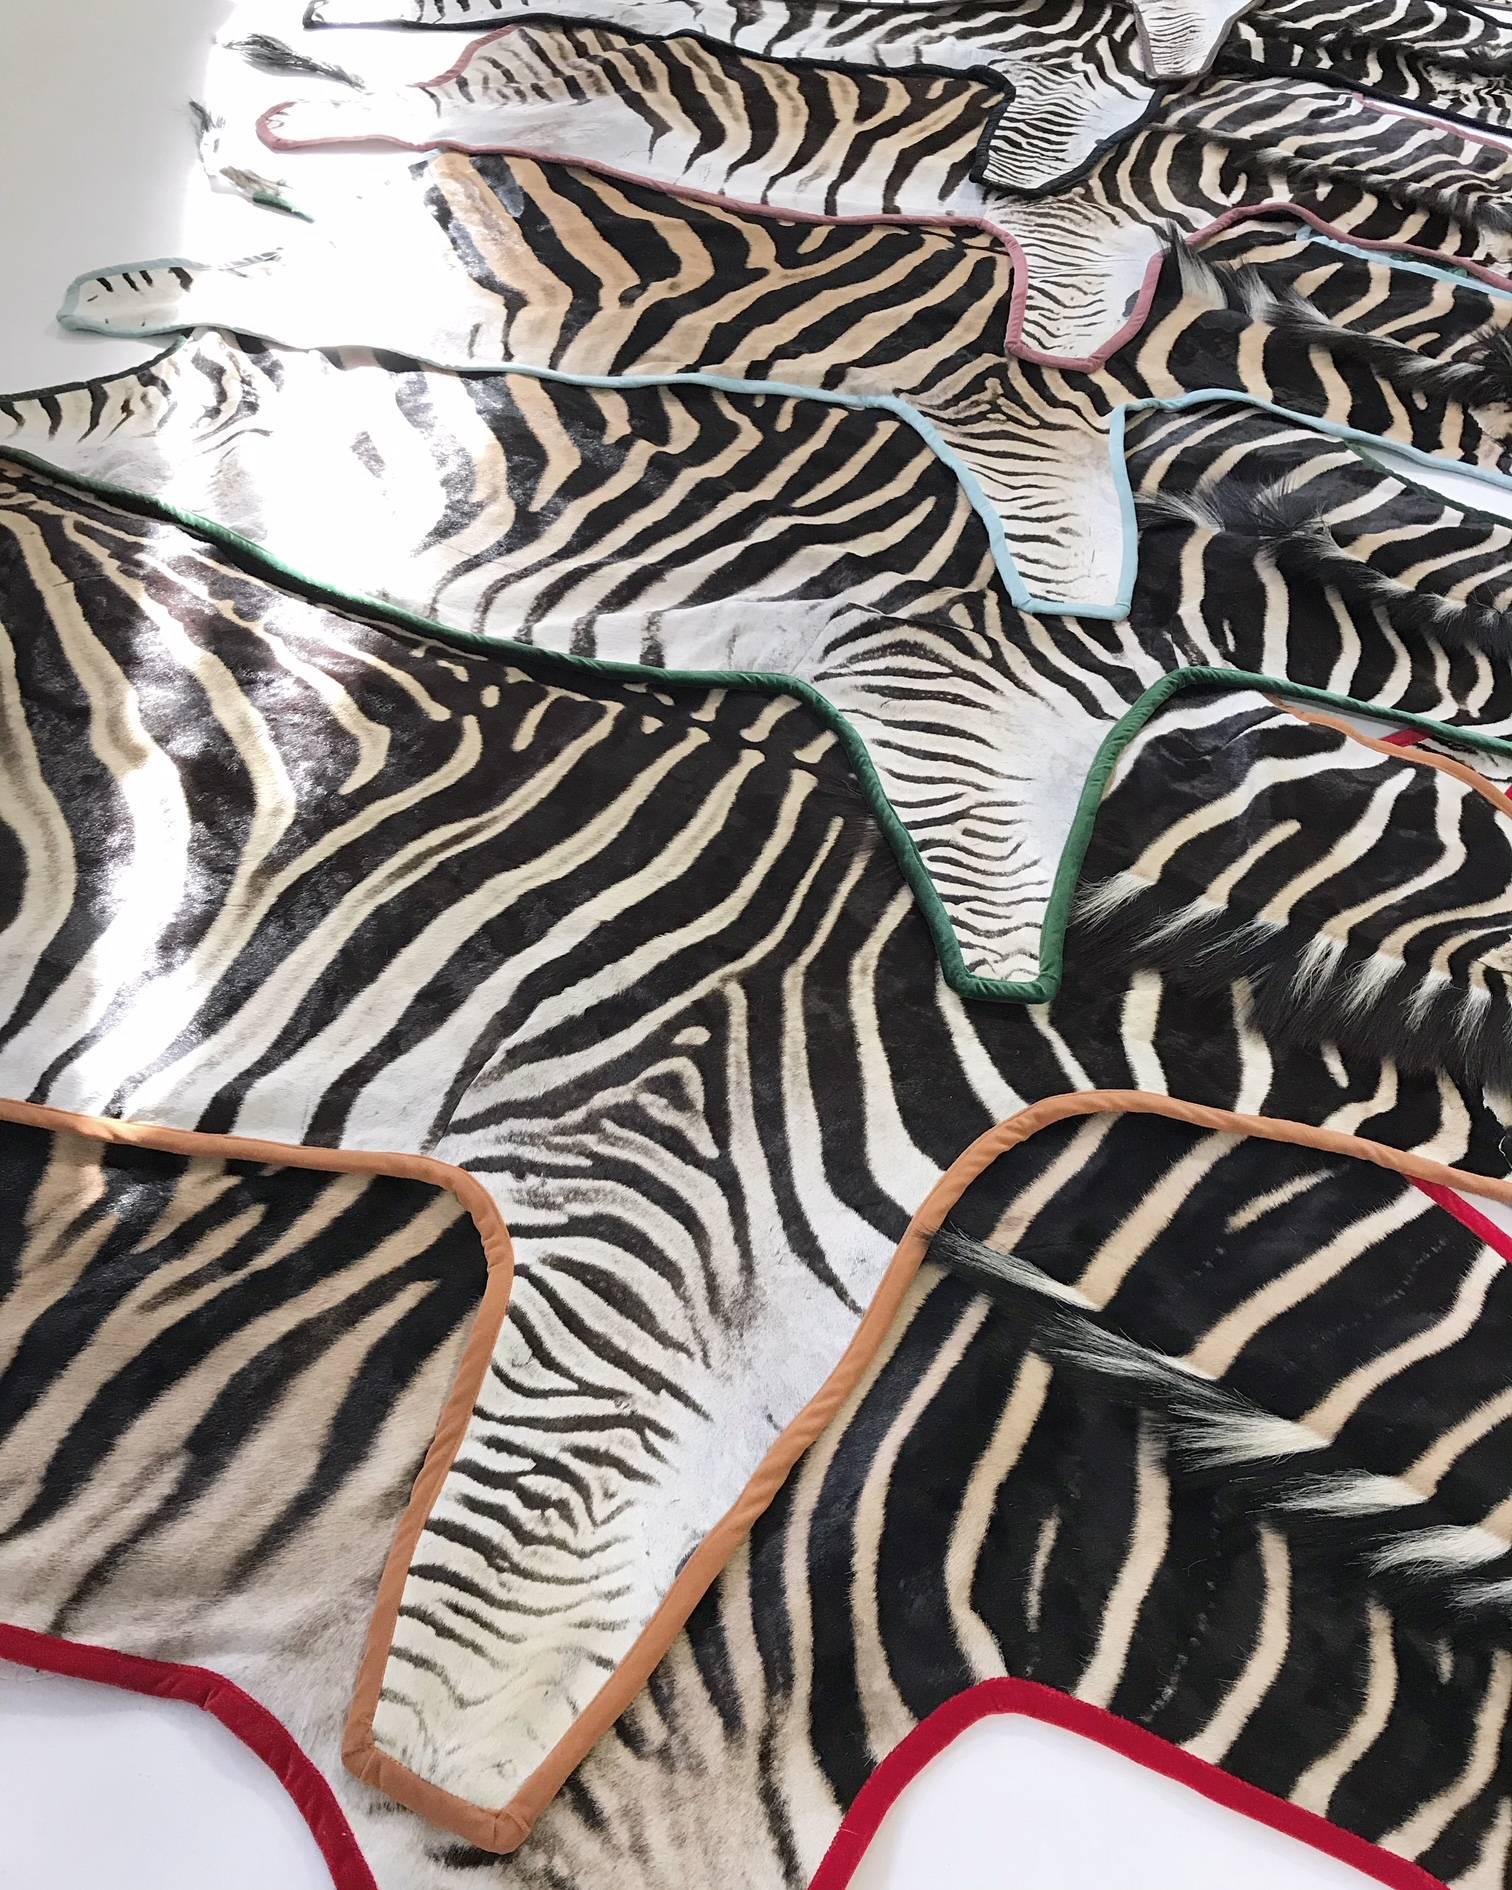 Forsyth Zebra Hide Rug Trimmed in Black Velvet For Sale 3